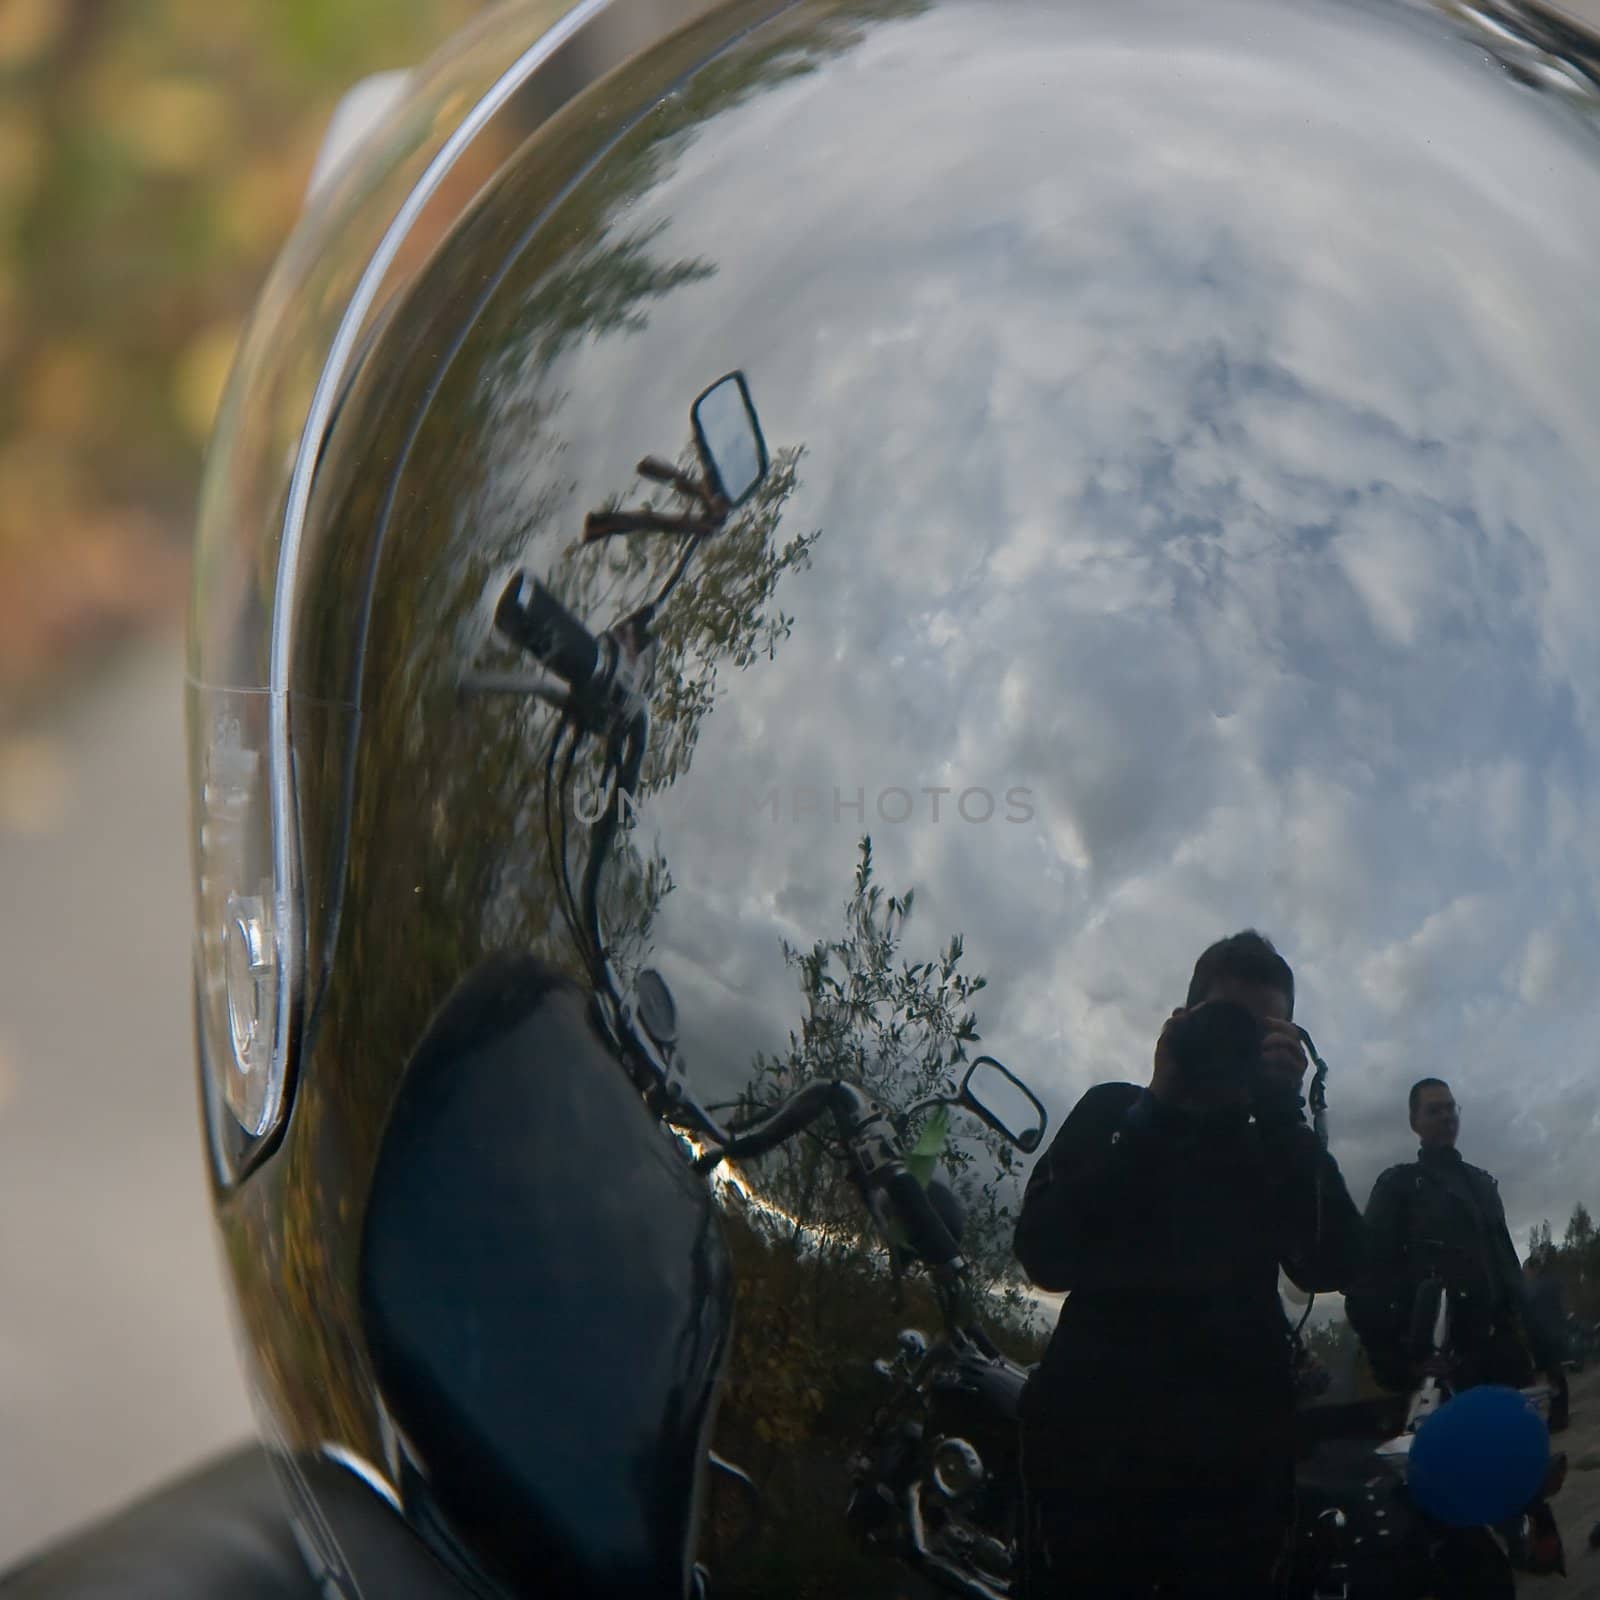 Sky reflexion in a motorcycle helmet by pzRomashka